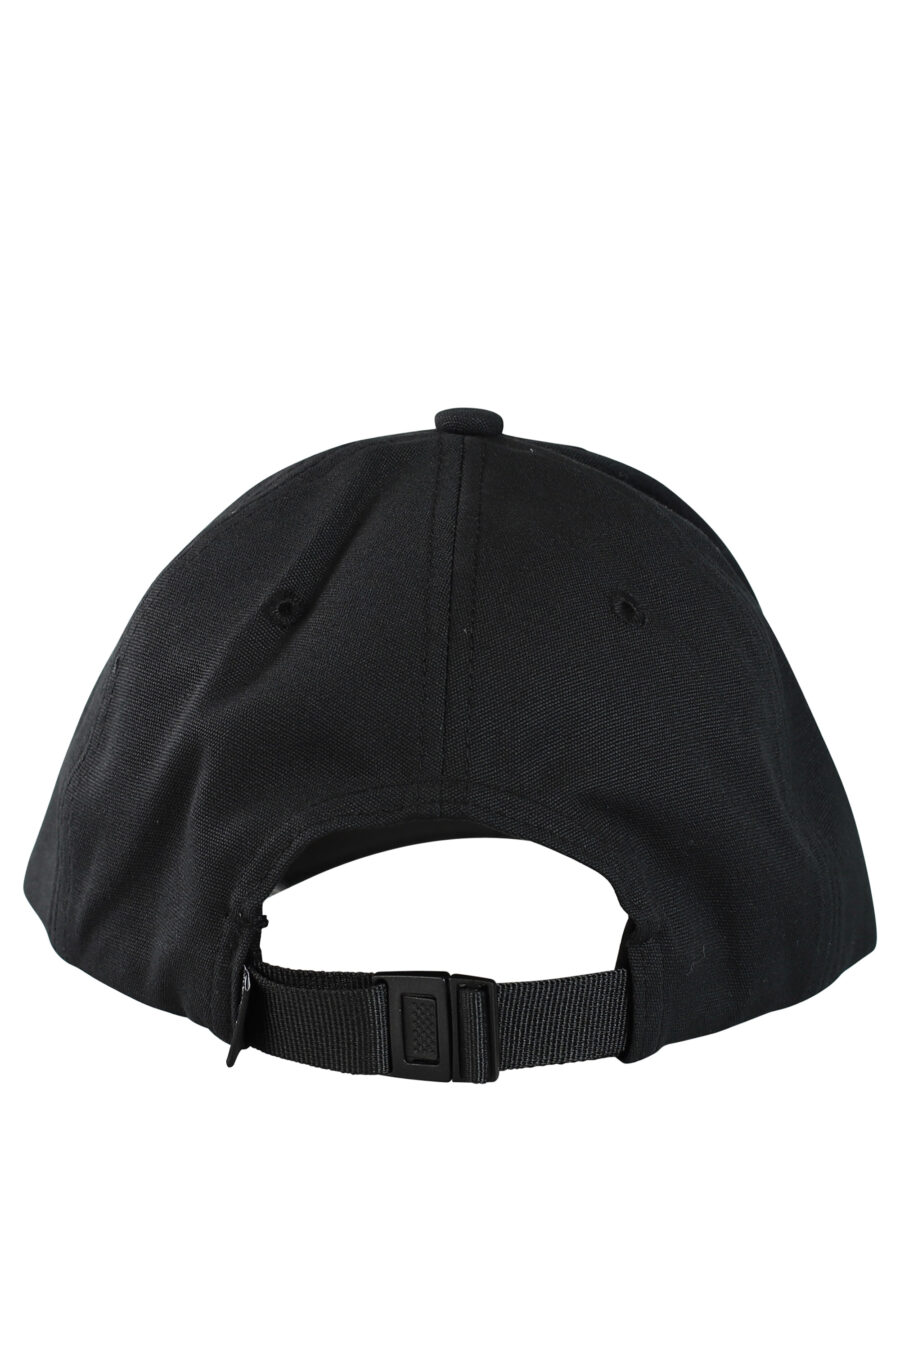 Schwarze Kappe mit kreisförmigem Logo - Fotos 532